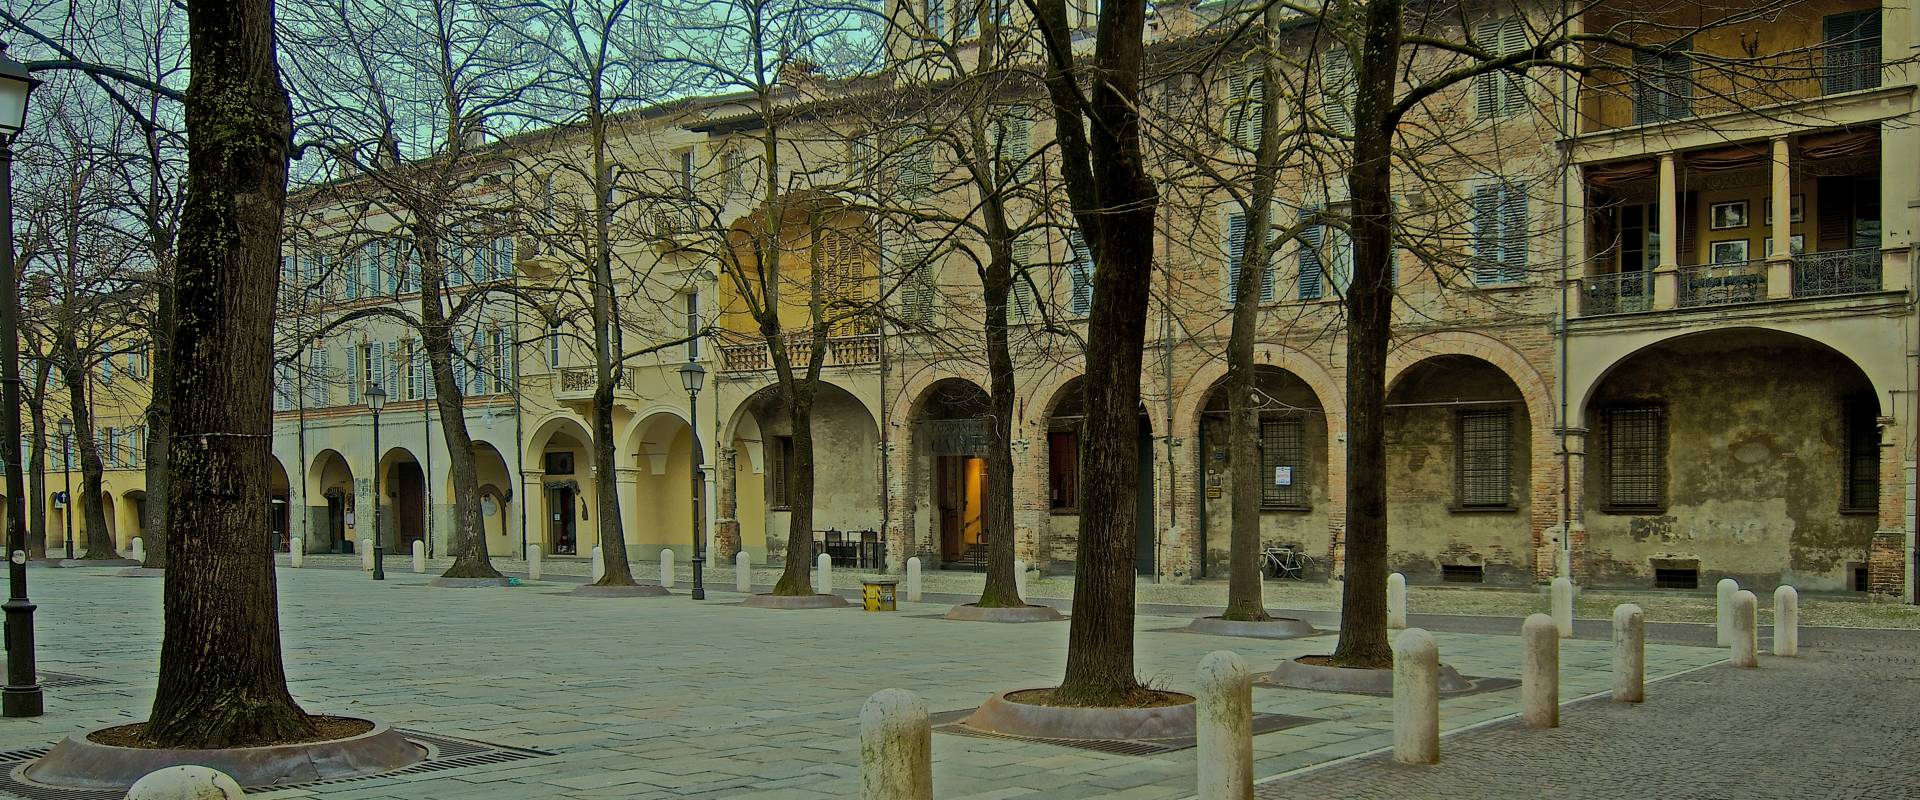 Piazza Antonio Fontanesi photo by Caba2011